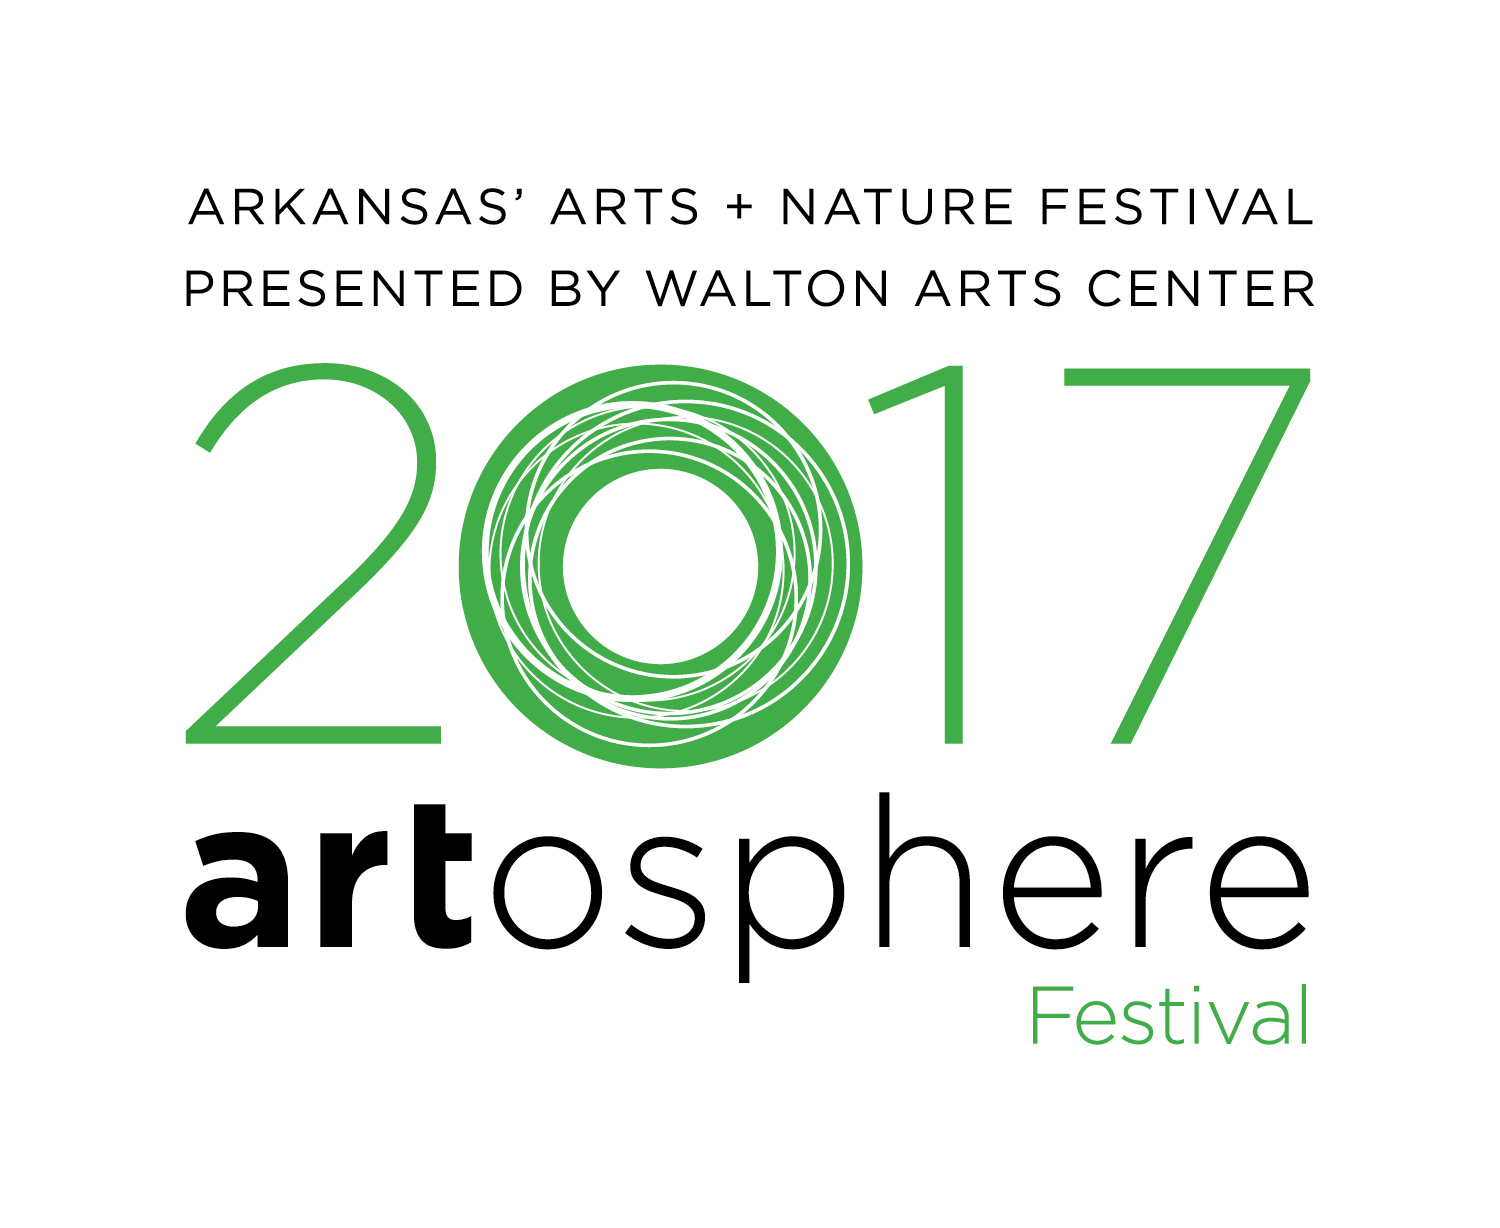 Artosphere: Arkansas' Arts and Nature Festival